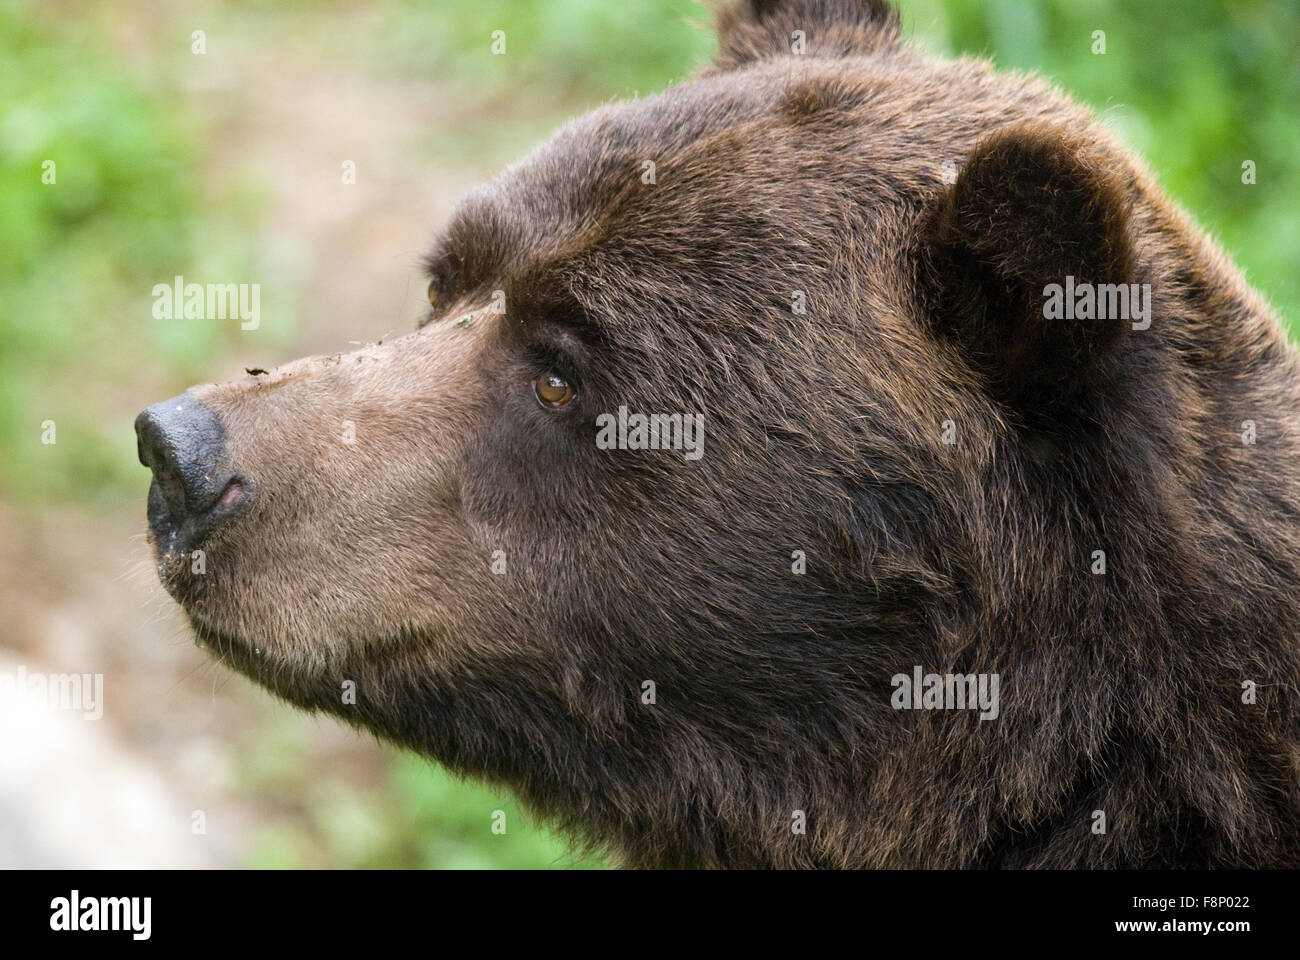 Braunbär (Ursus arctos) in der Wildnis, Osservatorio Eco-Faunistico Alpino, Aprica, Lombardei, Italien Stockfoto